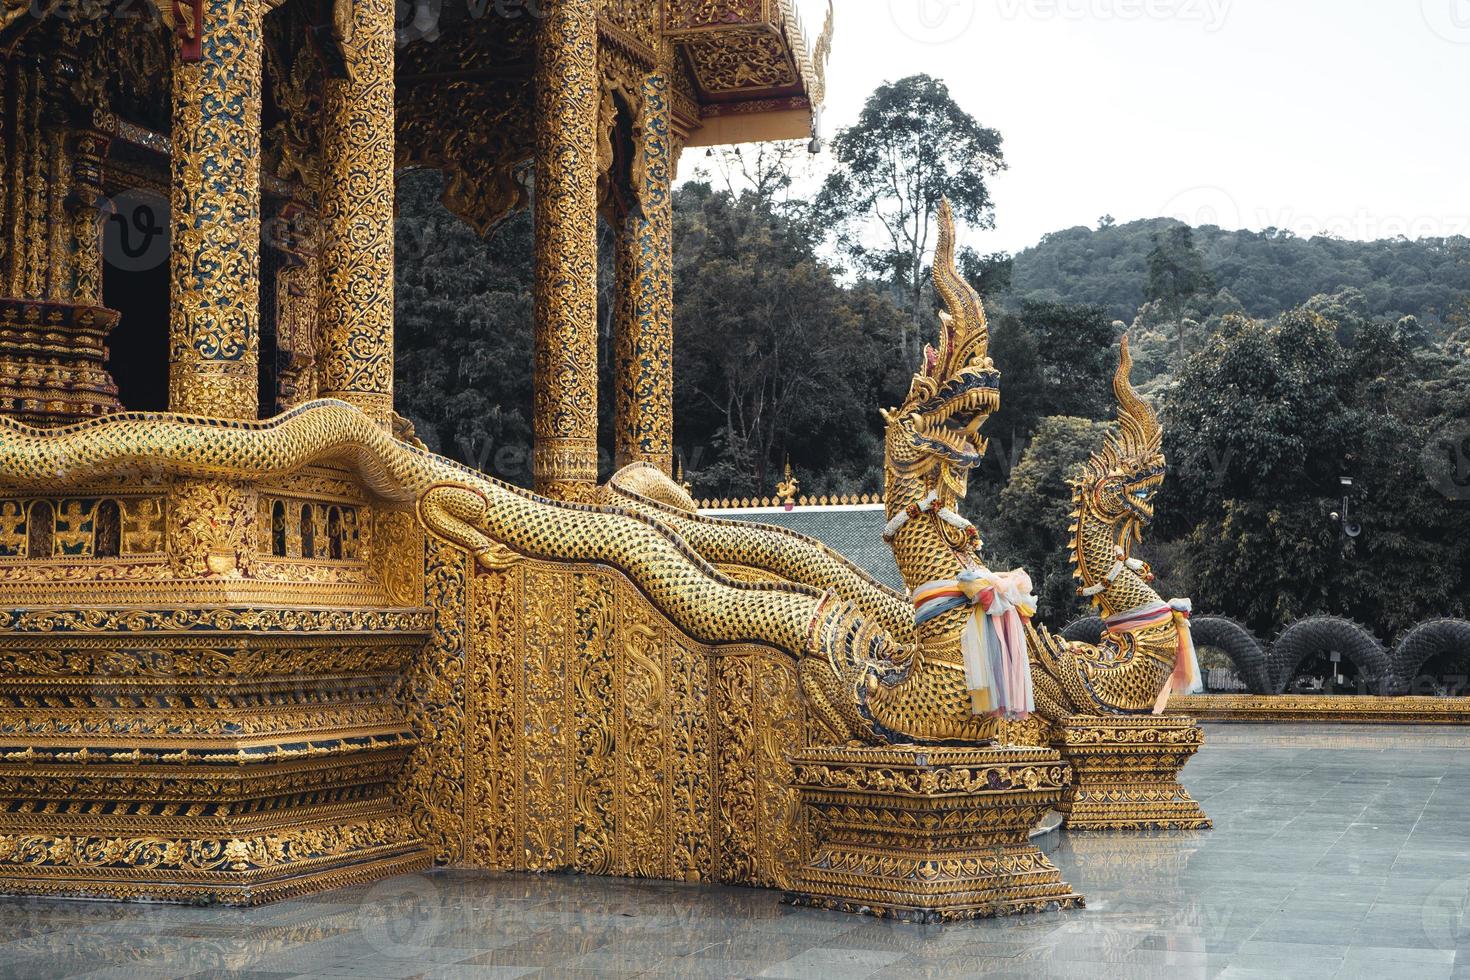 Wat Phra buddhabat si roi, goldener tempel in chiang mai, thailand foto